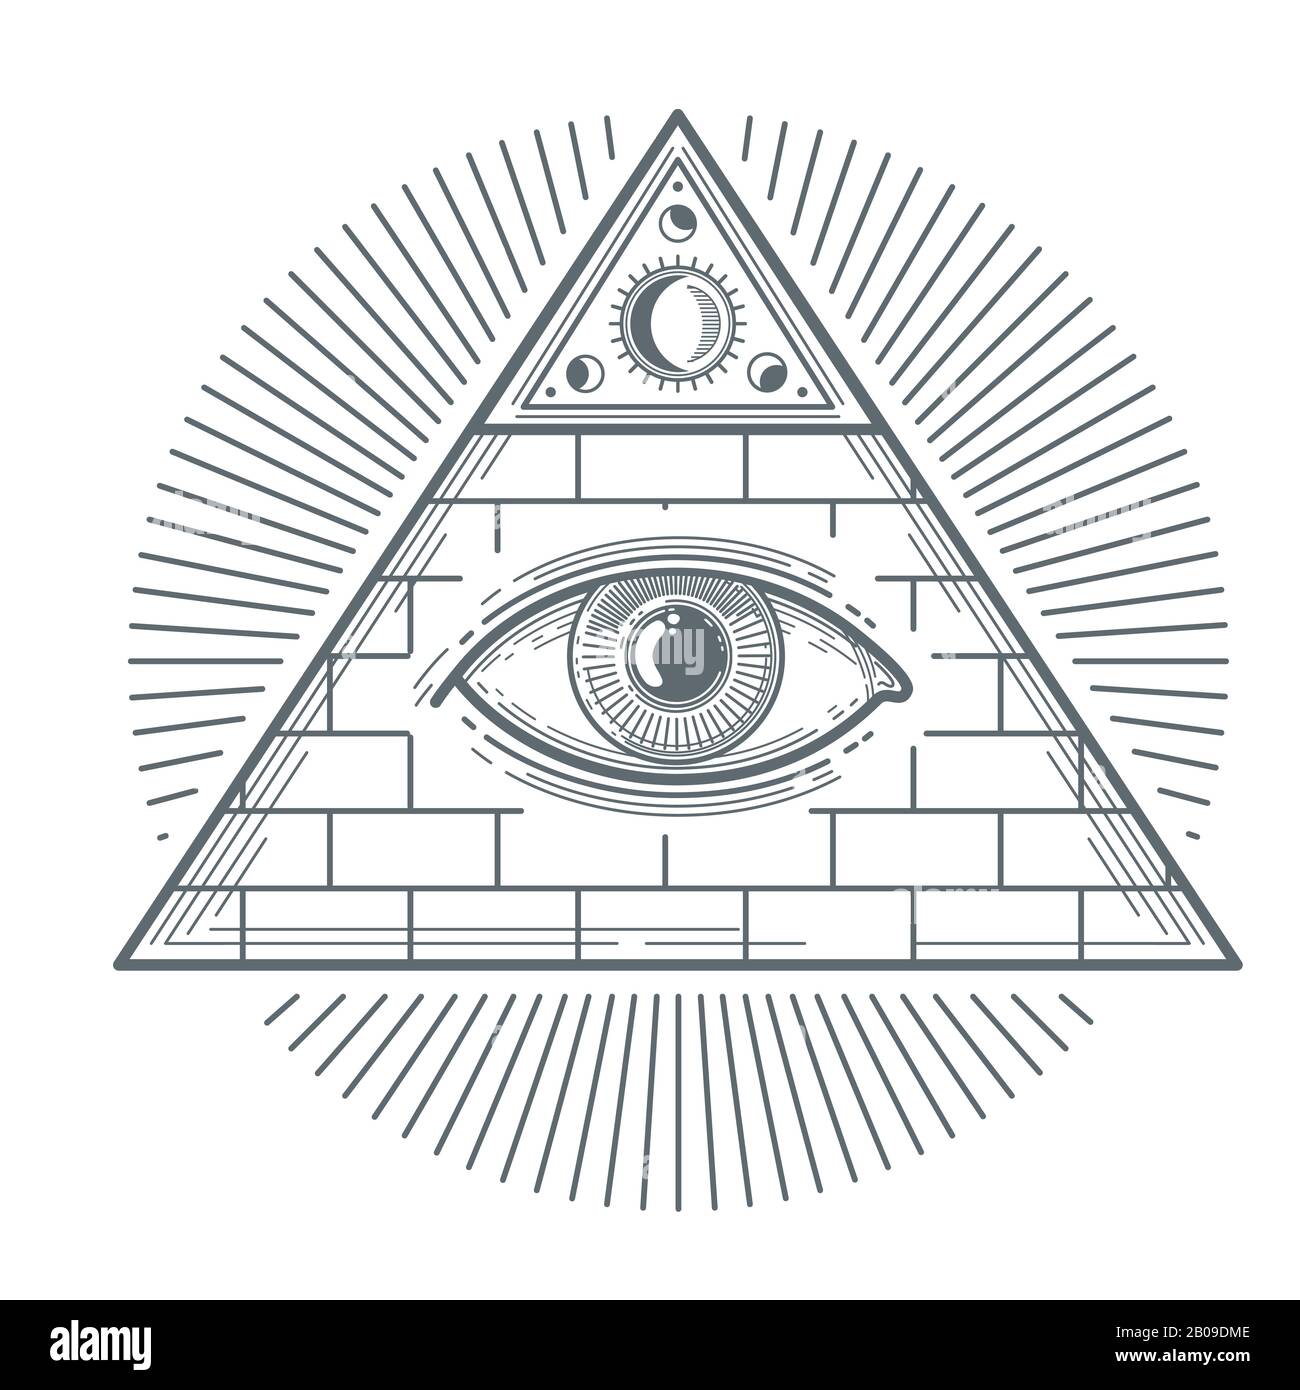 Mystical occult sign with freemasonry eye symbol vector illustration. Freemasonry mystic sign, pyramid with eye Stock Vector